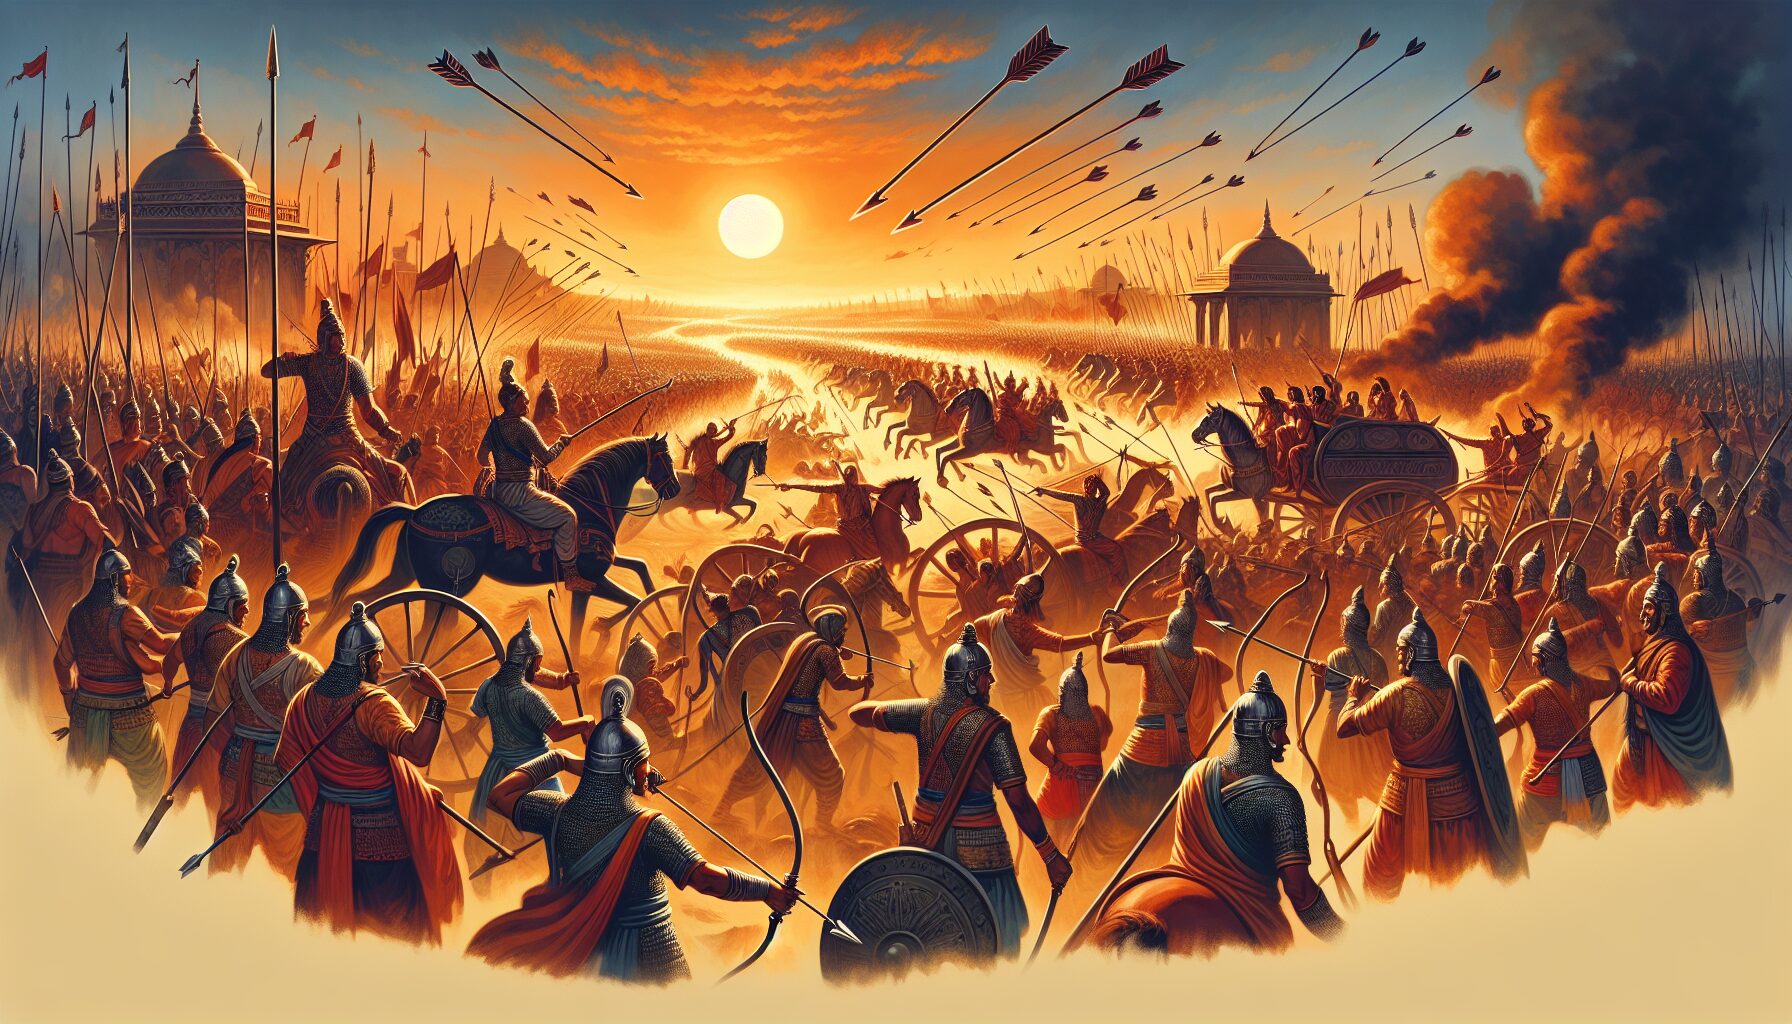 How Did The Battle Of Kurukshetra Start And End?